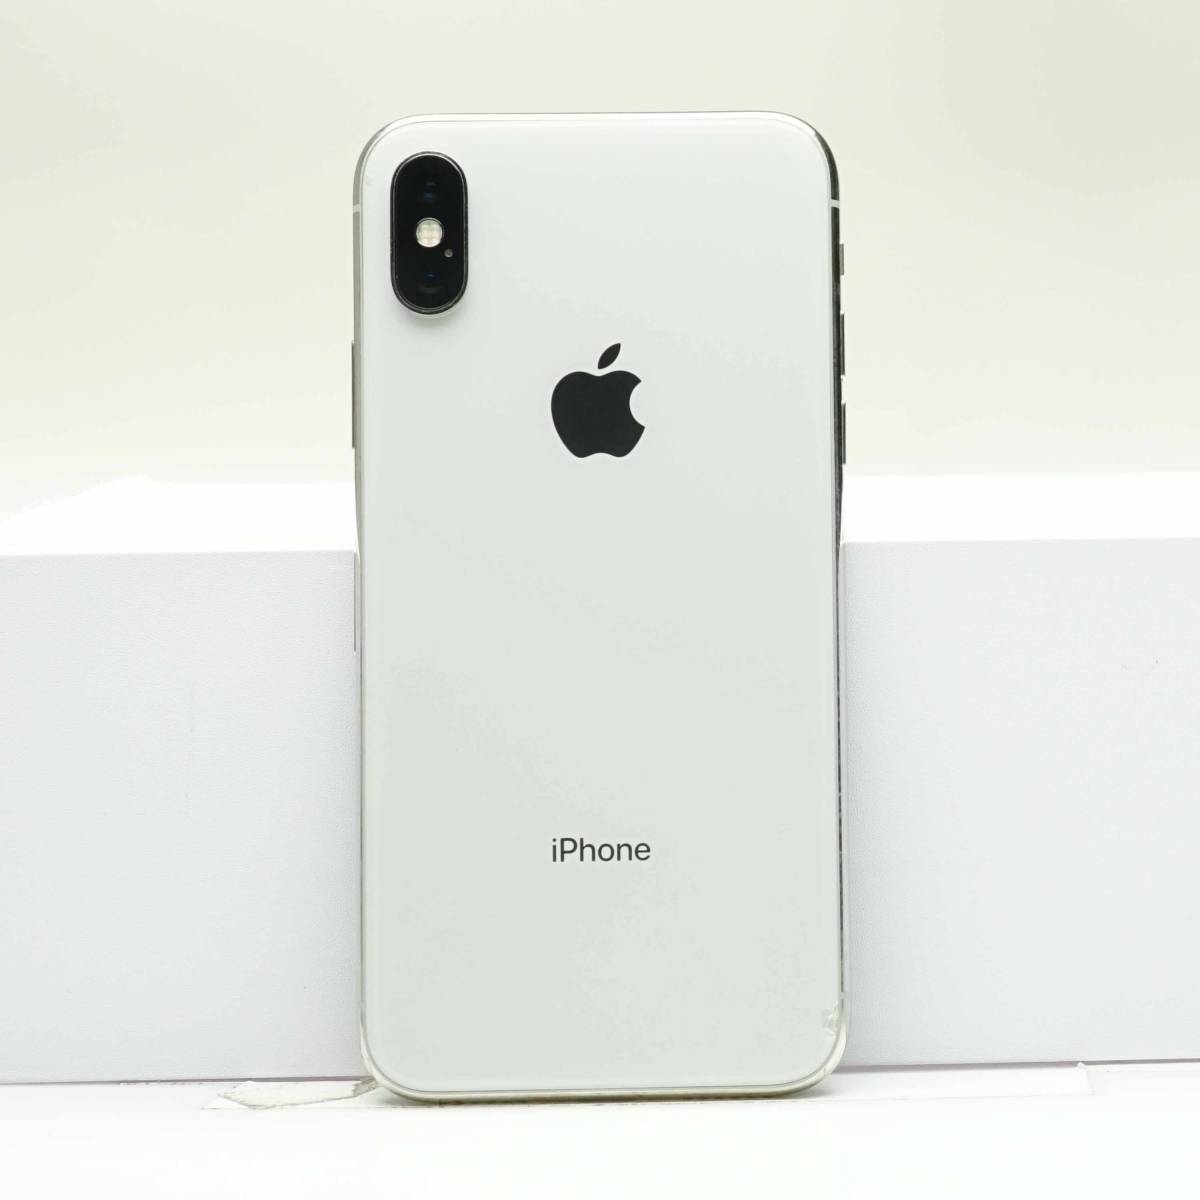 iPhone X 256GB SIMフリ― シルバー 中古本体 訳あり品 MQC22J/A 白ロム